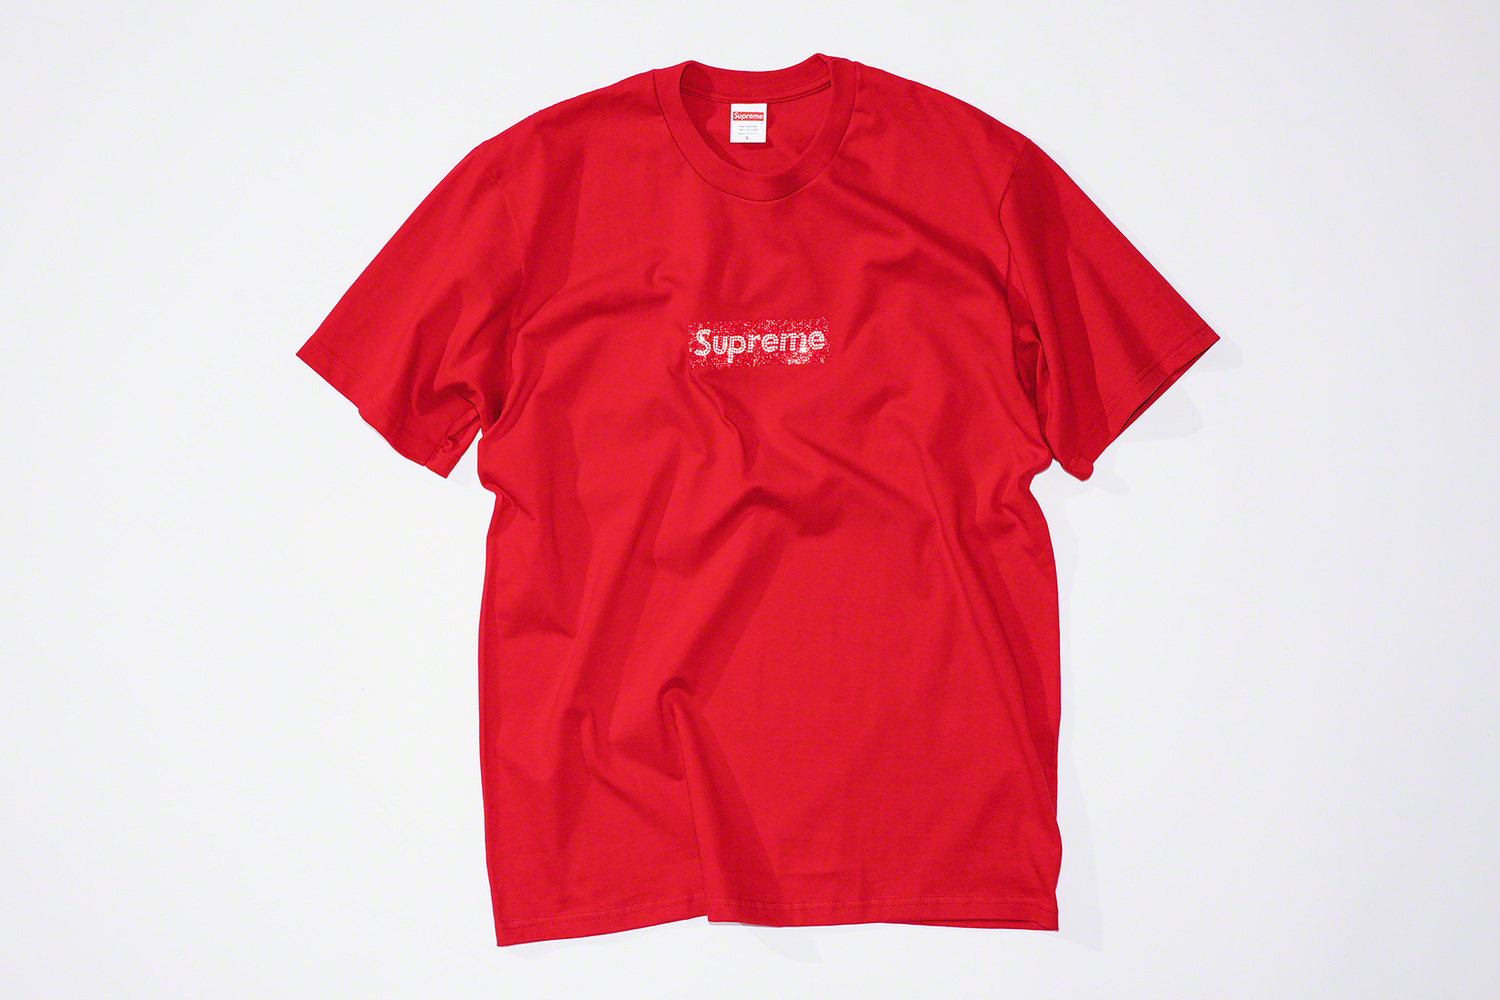 supreme-box-logo-swarovski-shirt-hoodie-1